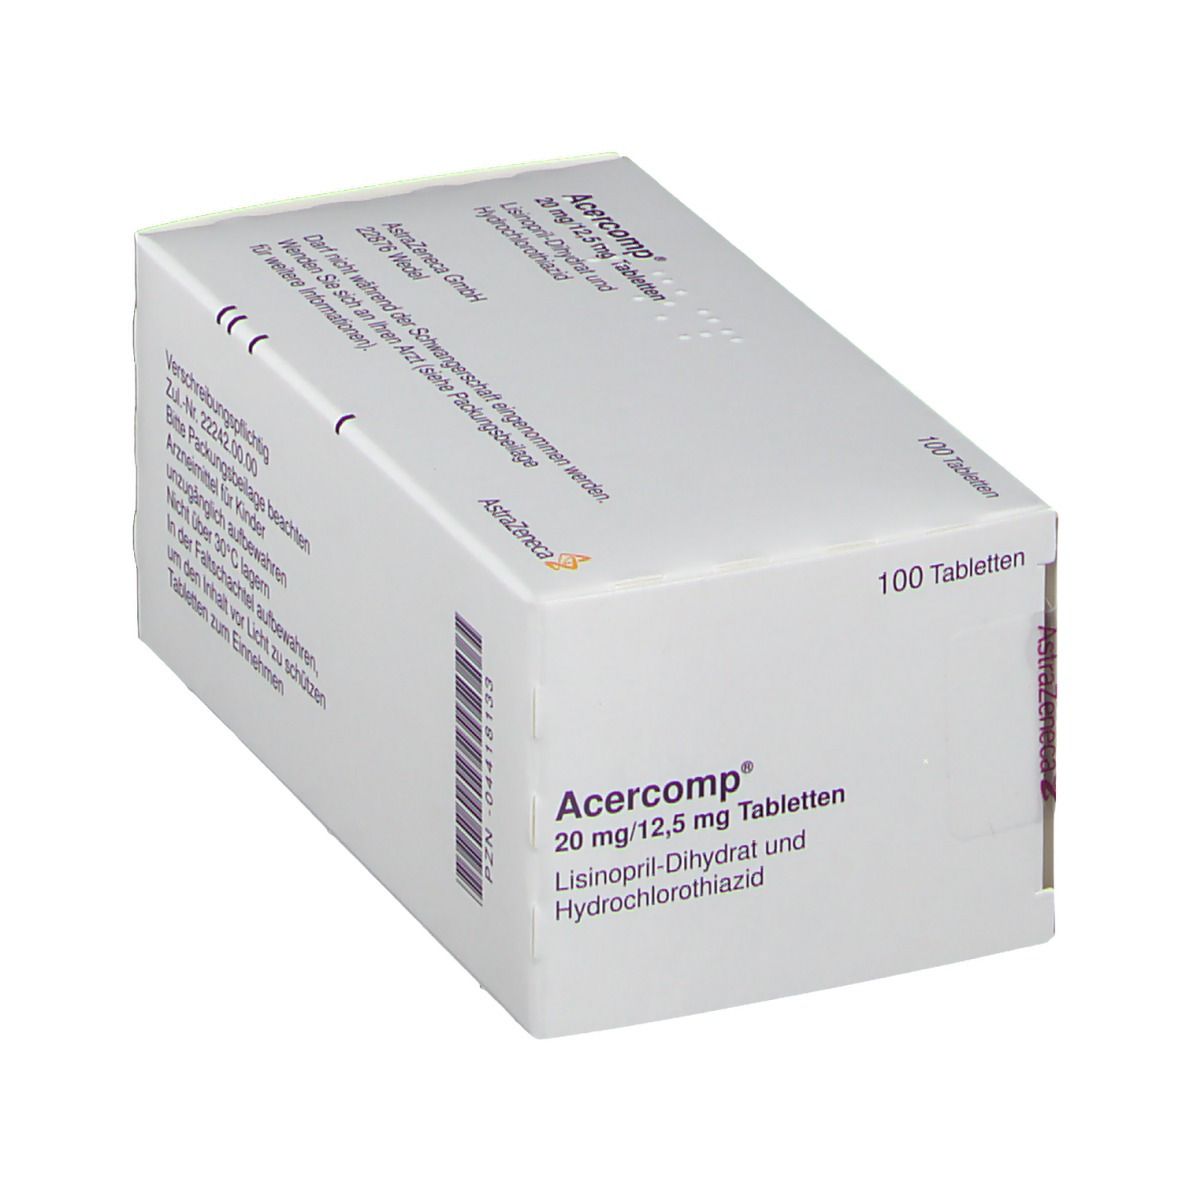 Acercomp® 20 mg/12,5 mg